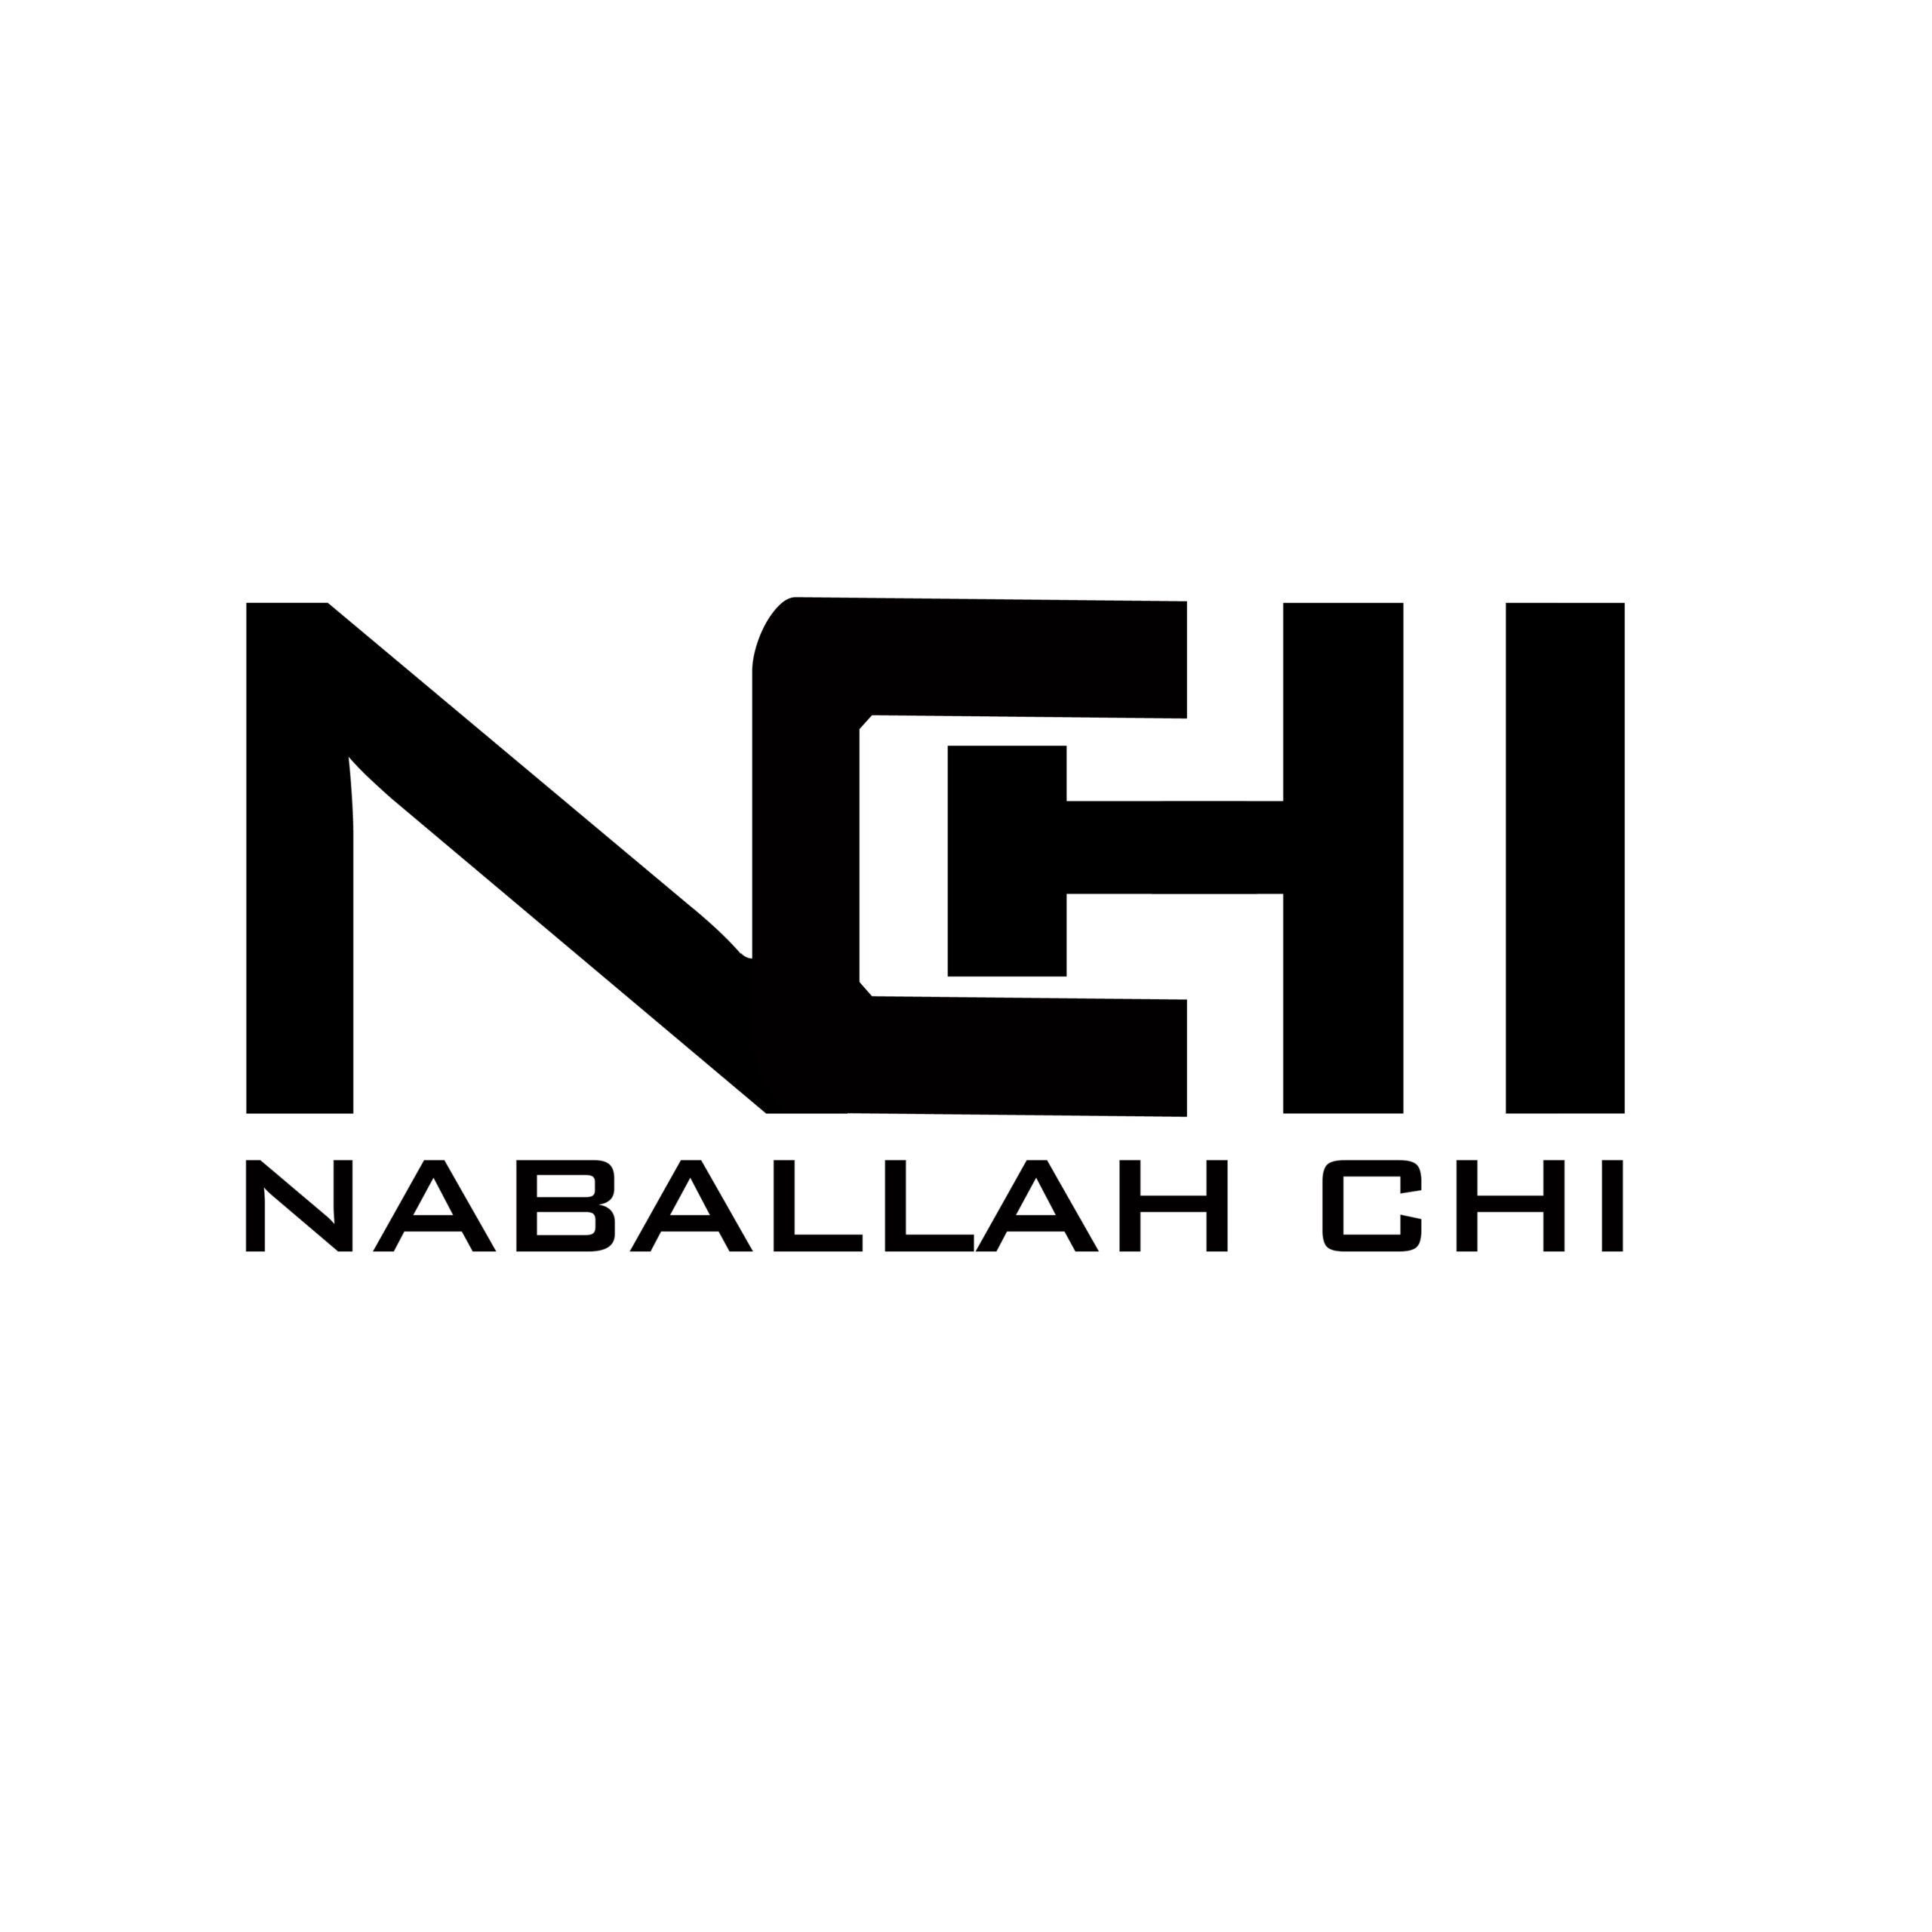 Naballah Chi – Where Art Meets Fashion